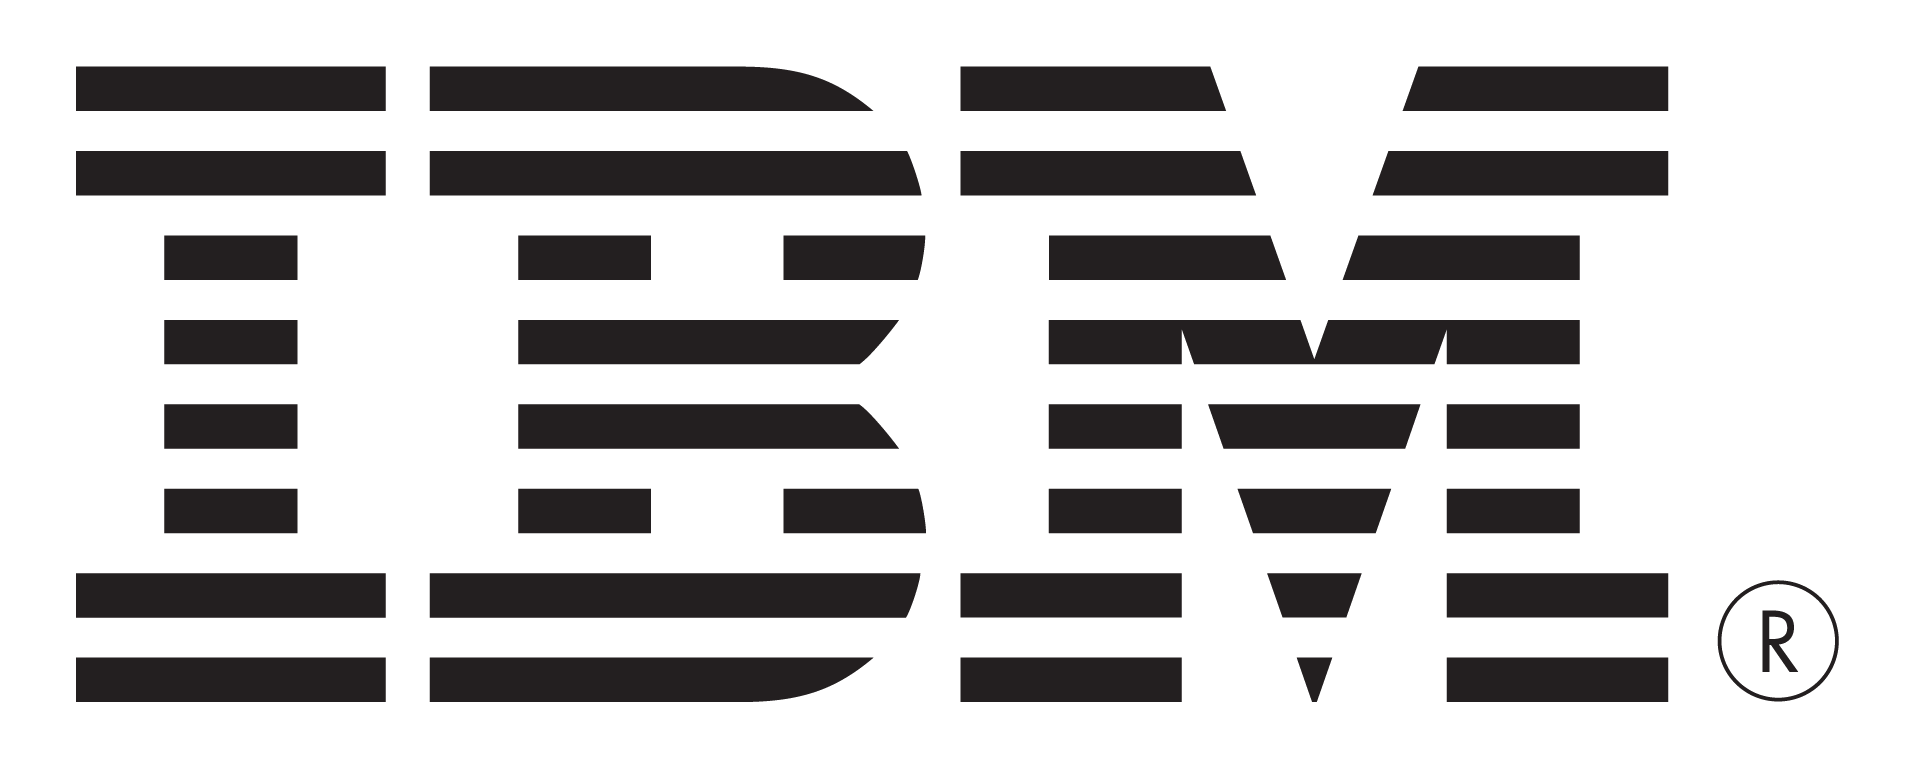 Official IBM Logo - IBM Logo PNG Image - PurePNG | Free transparent CC0 PNG Image Library